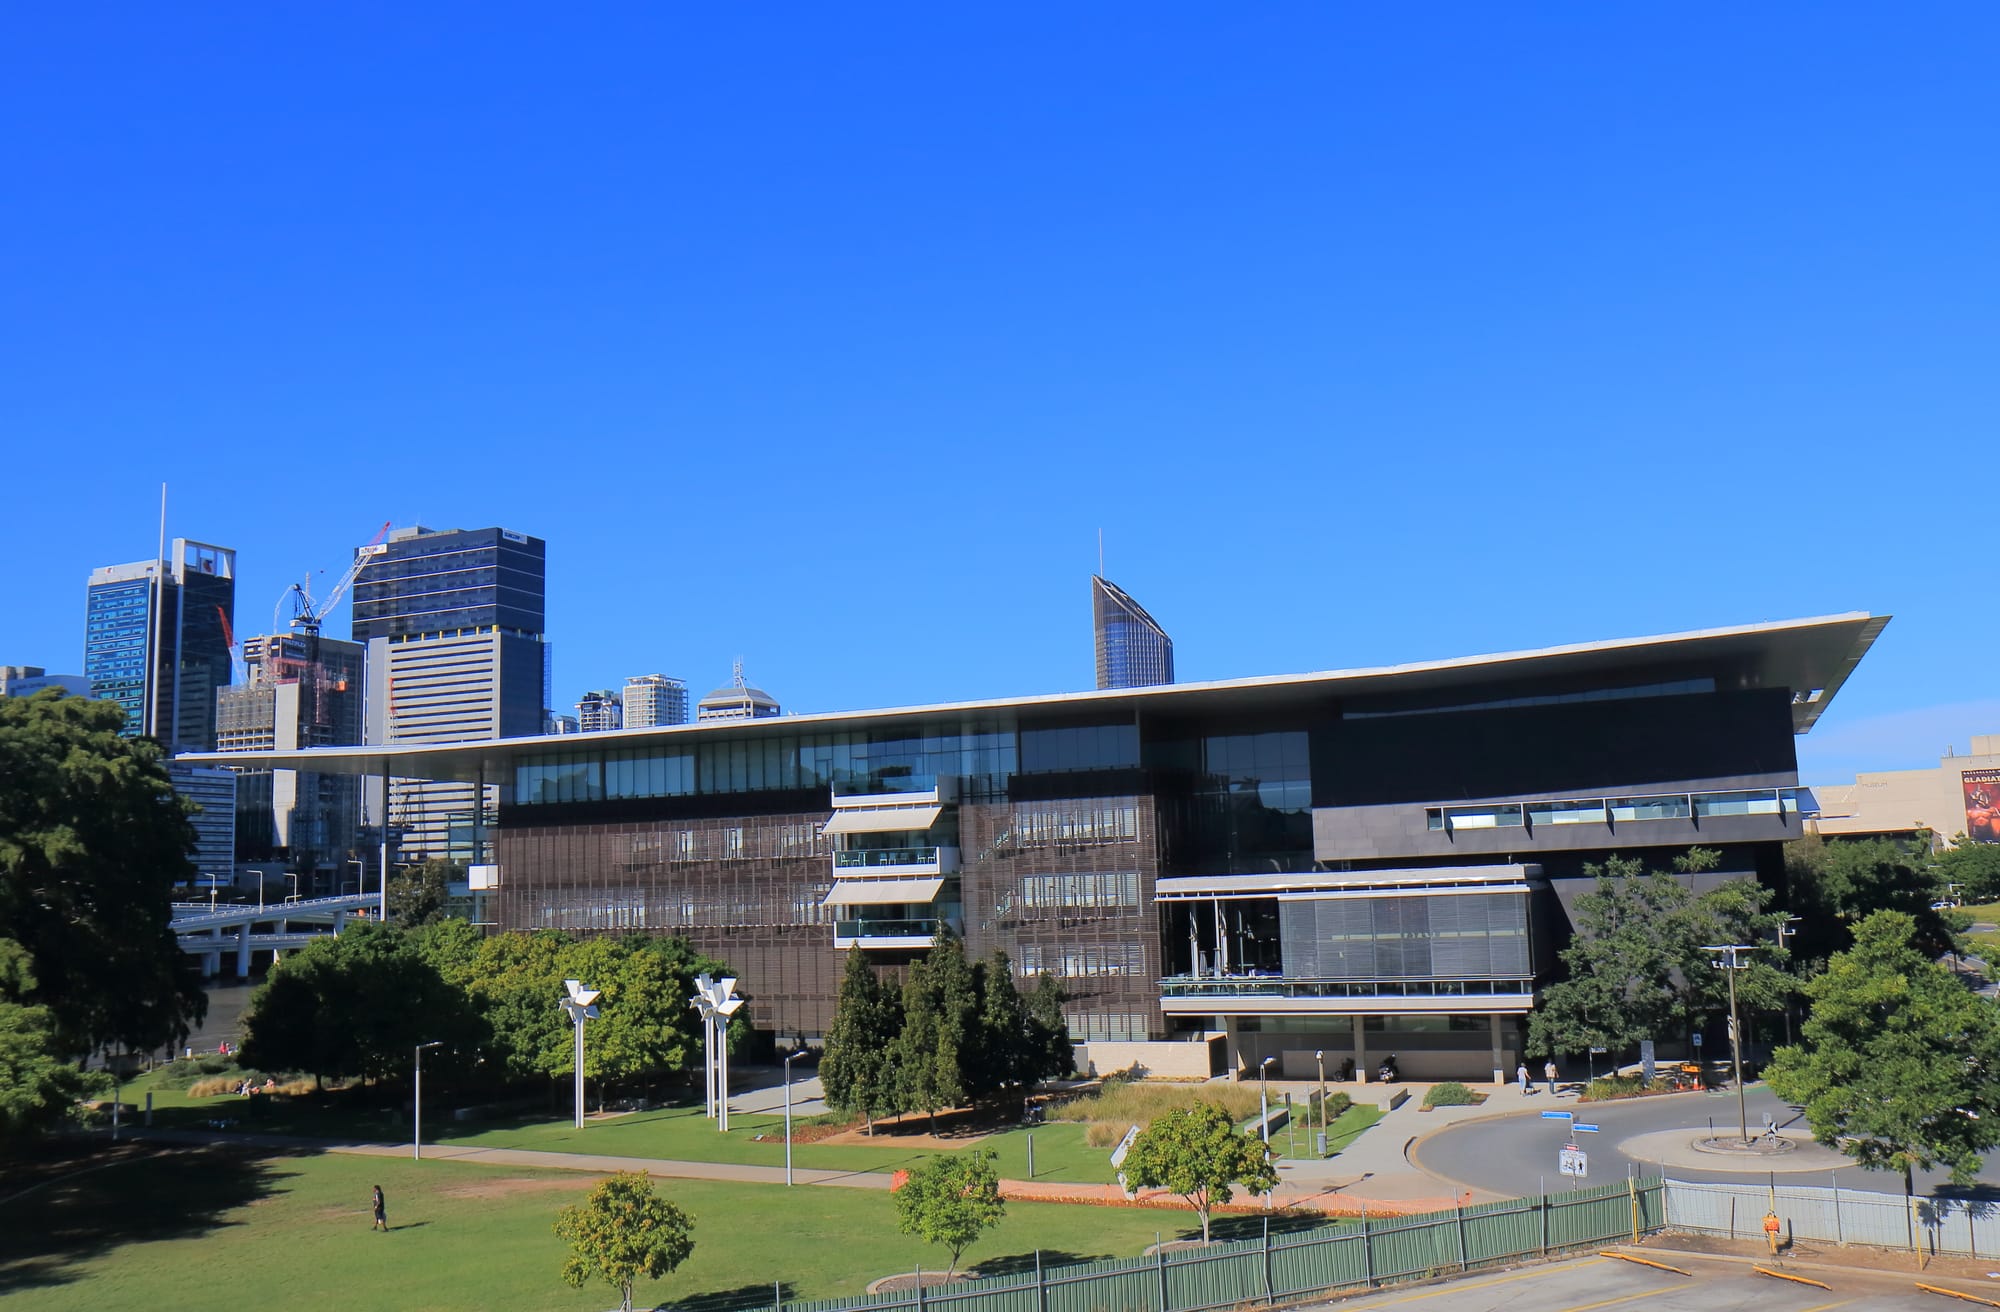 Galerij voor moderne kunst Brisbane